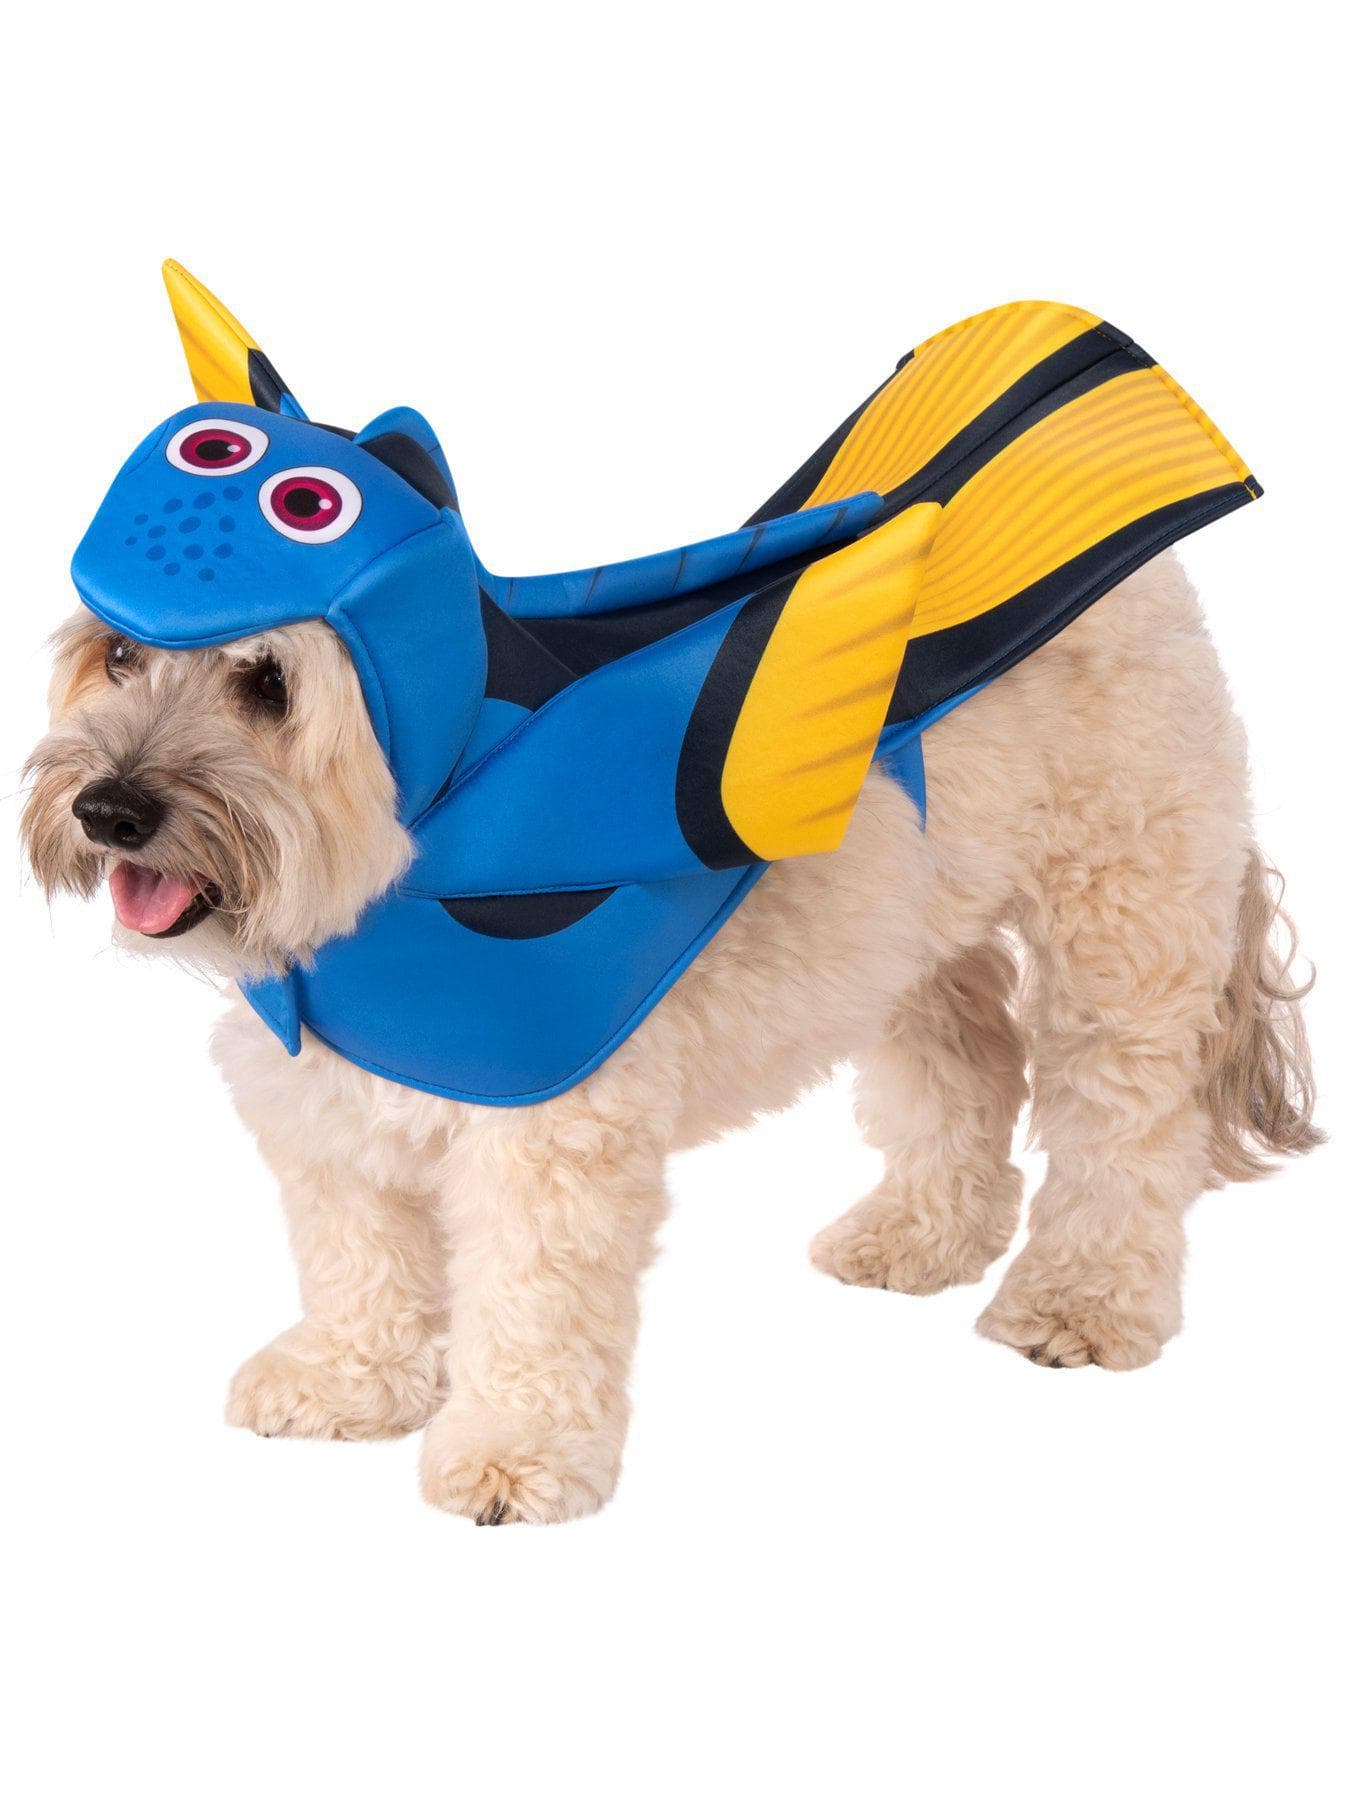 Finding Nemo Dory Pet Costume - costumes.com